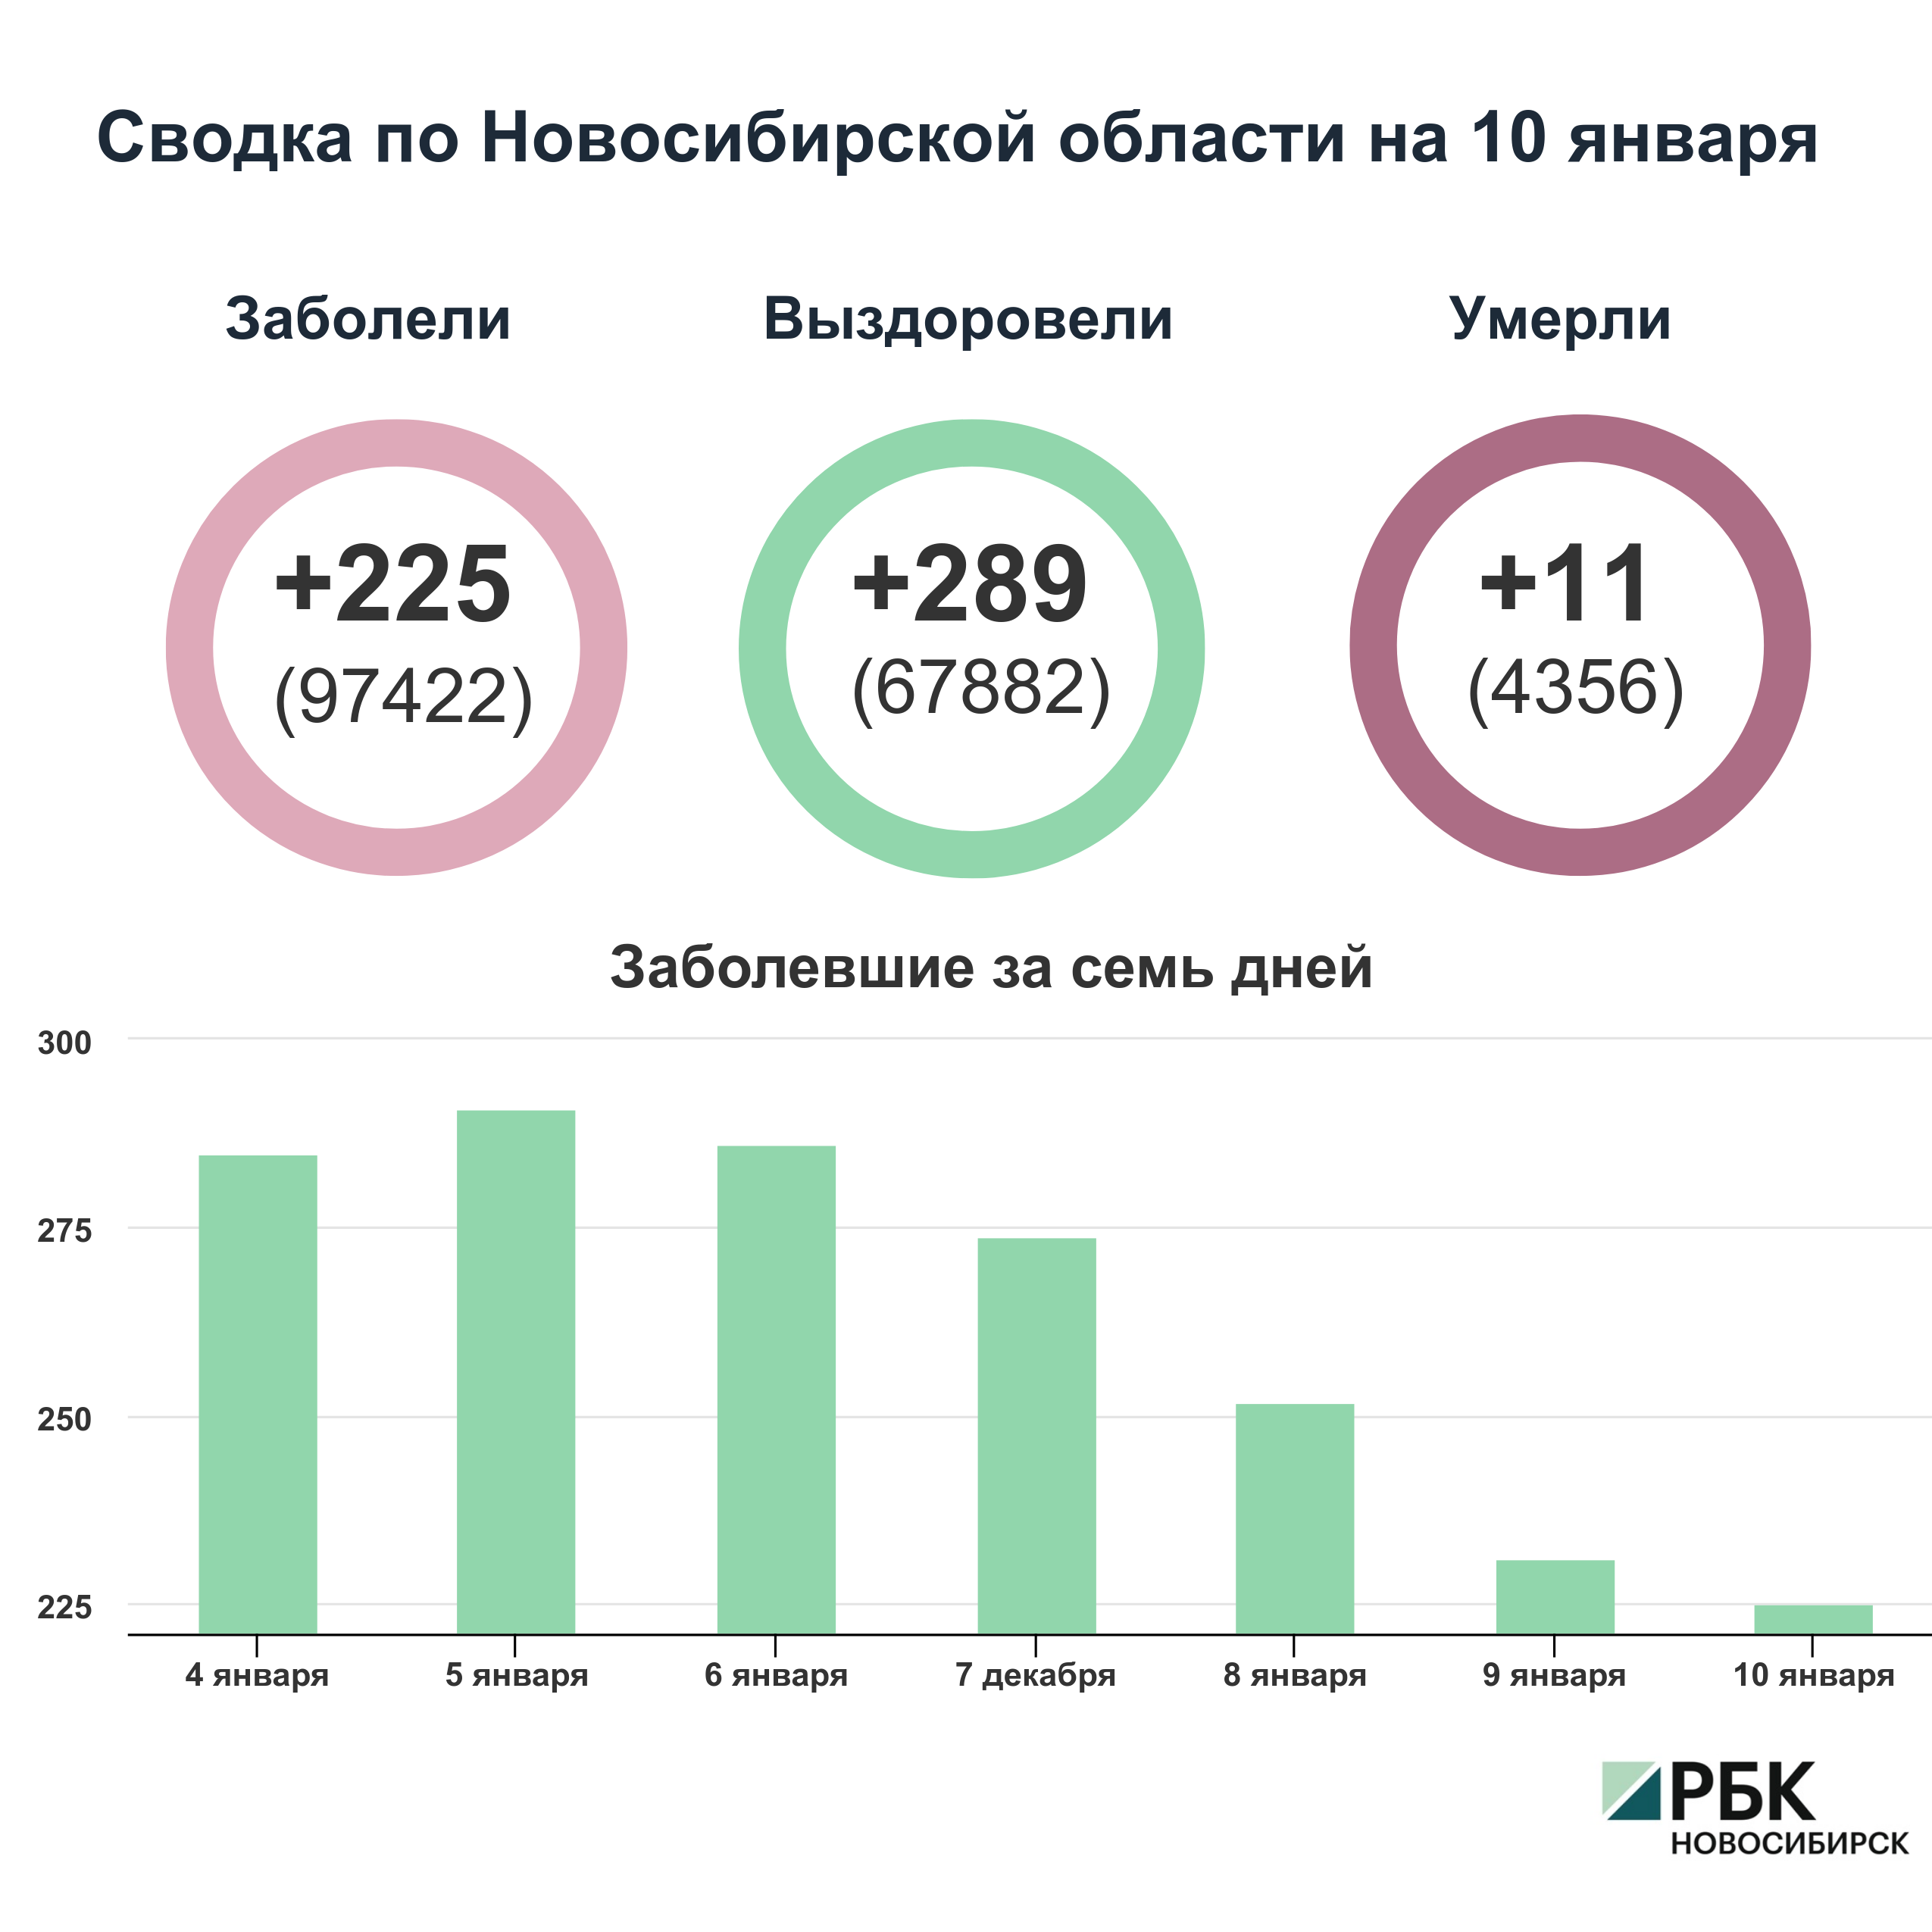 Коронавирус в Новосибирске: сводка на 10 января